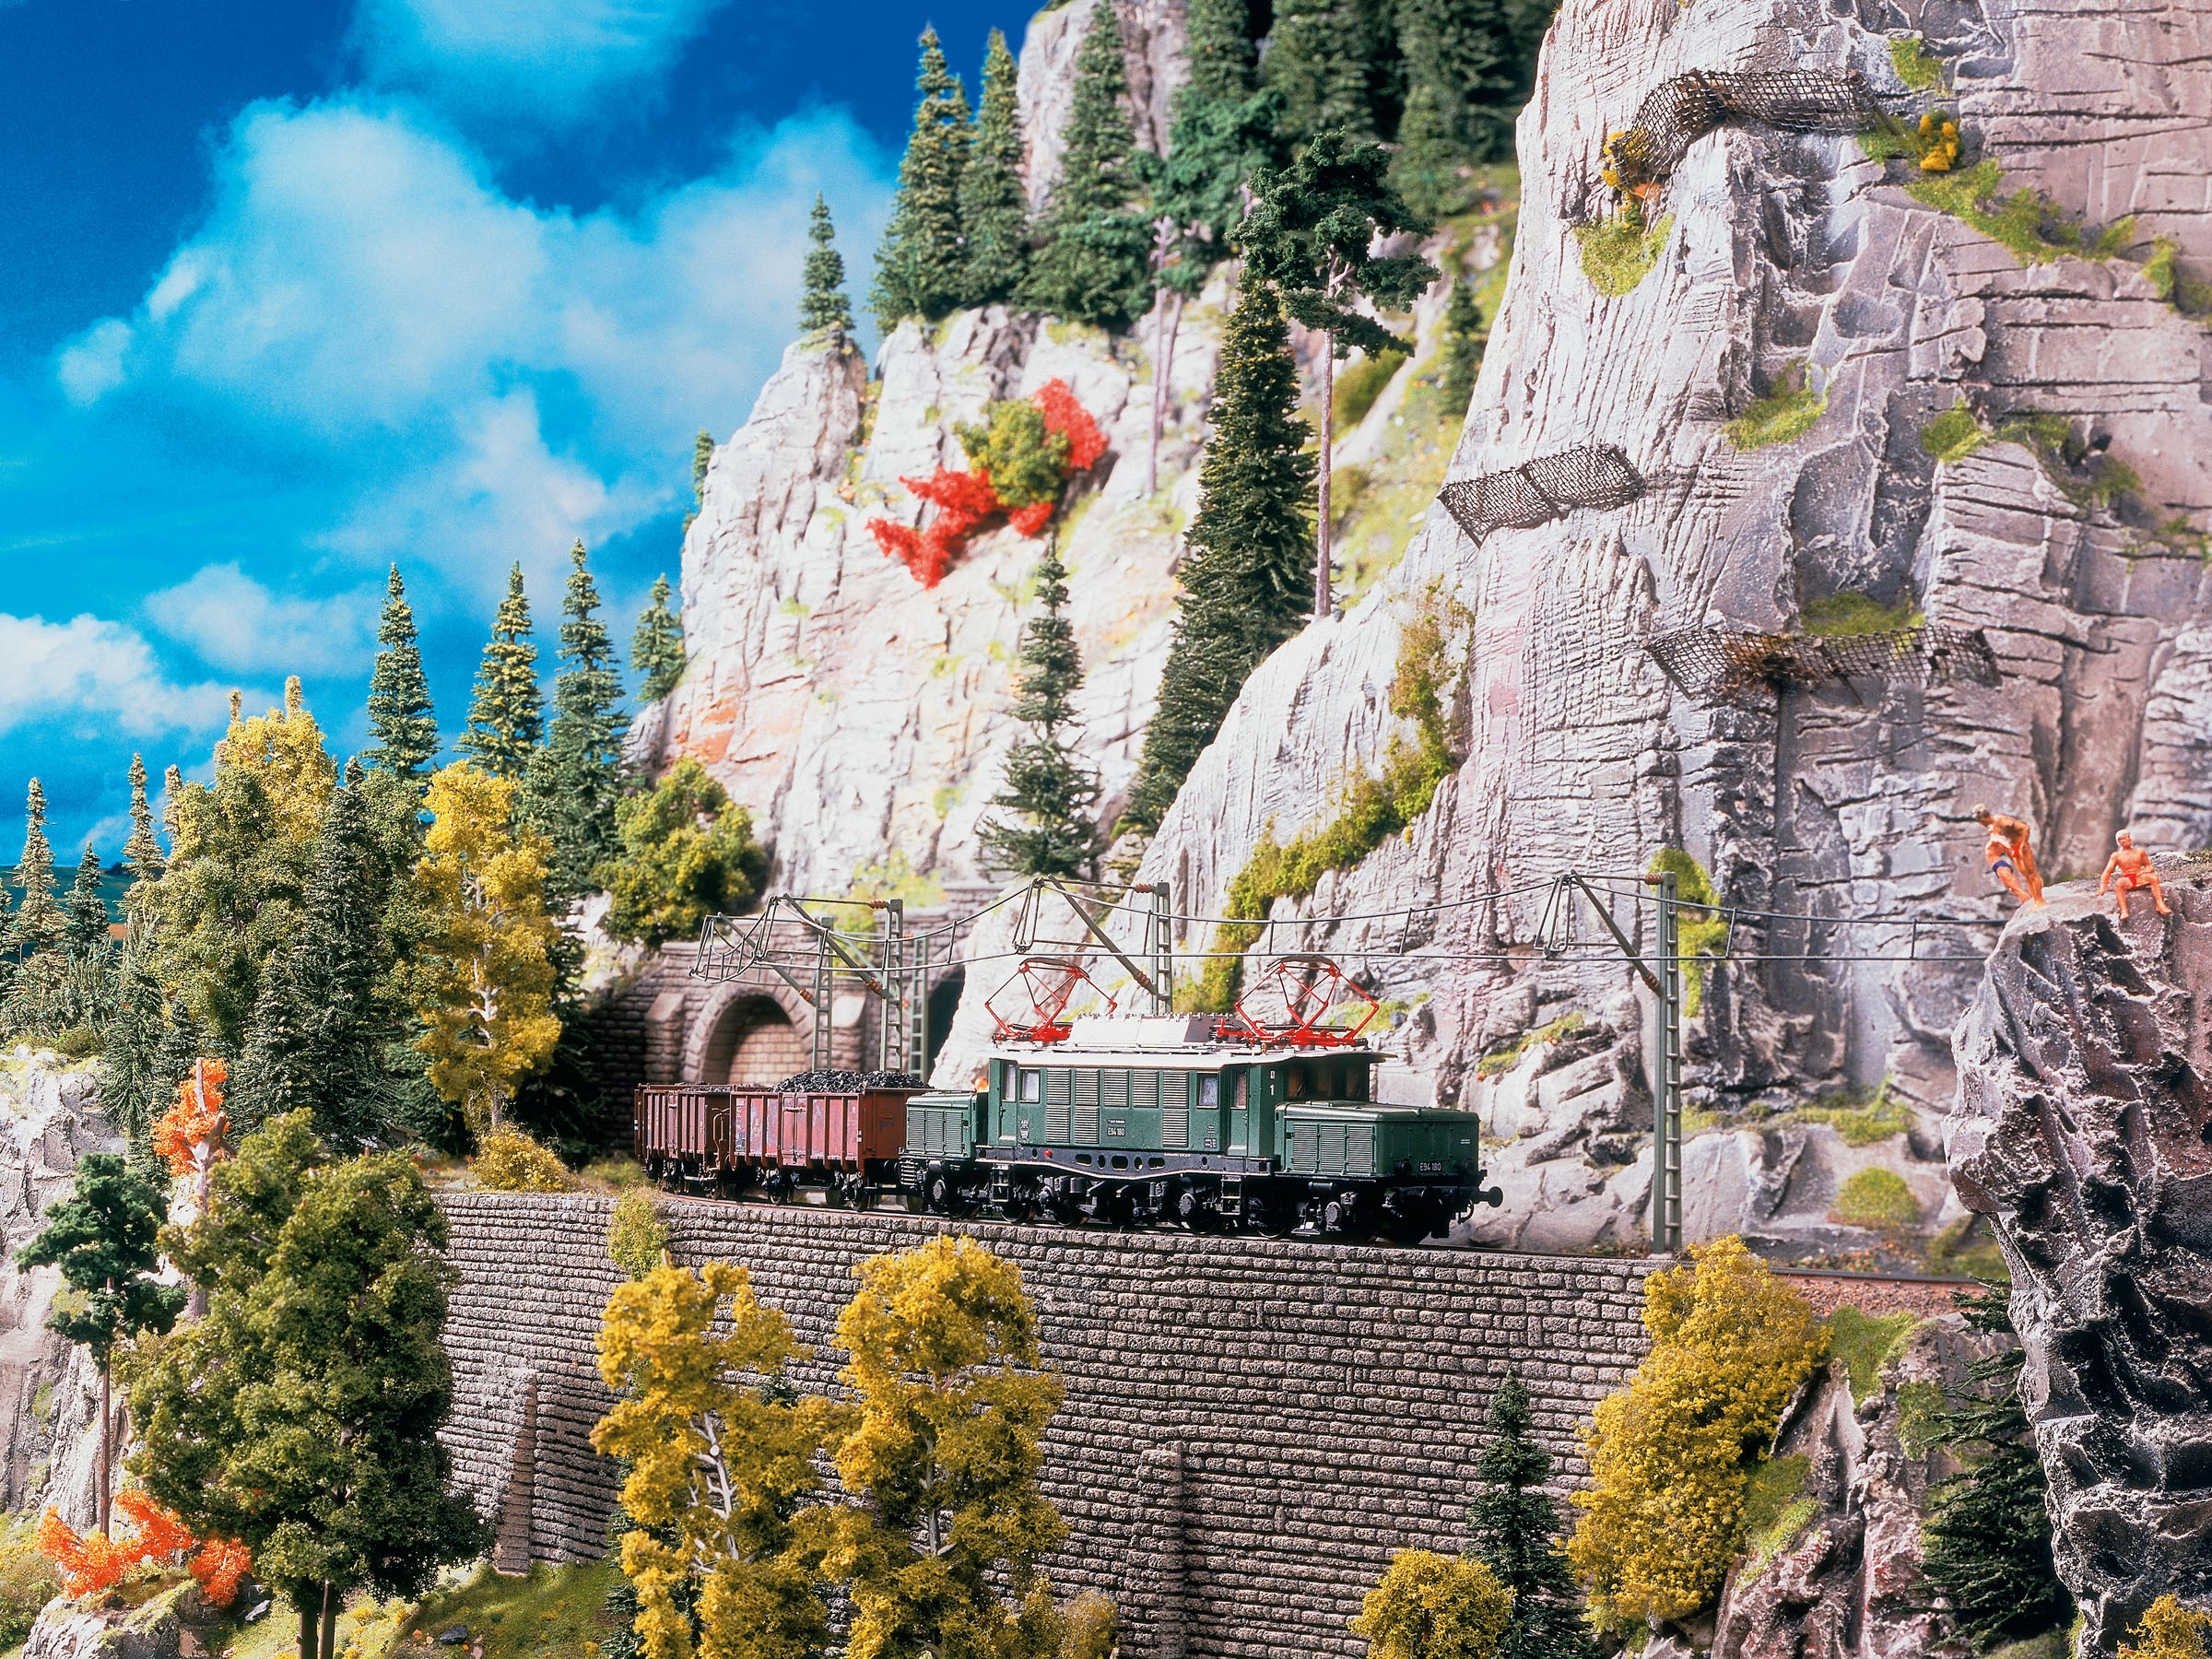 modellismo ferroviario, ferromodellismo, fermodellismo - Fascinating video of the world’s largest HO scale model railway layout - Miniatur Wunderland Germany